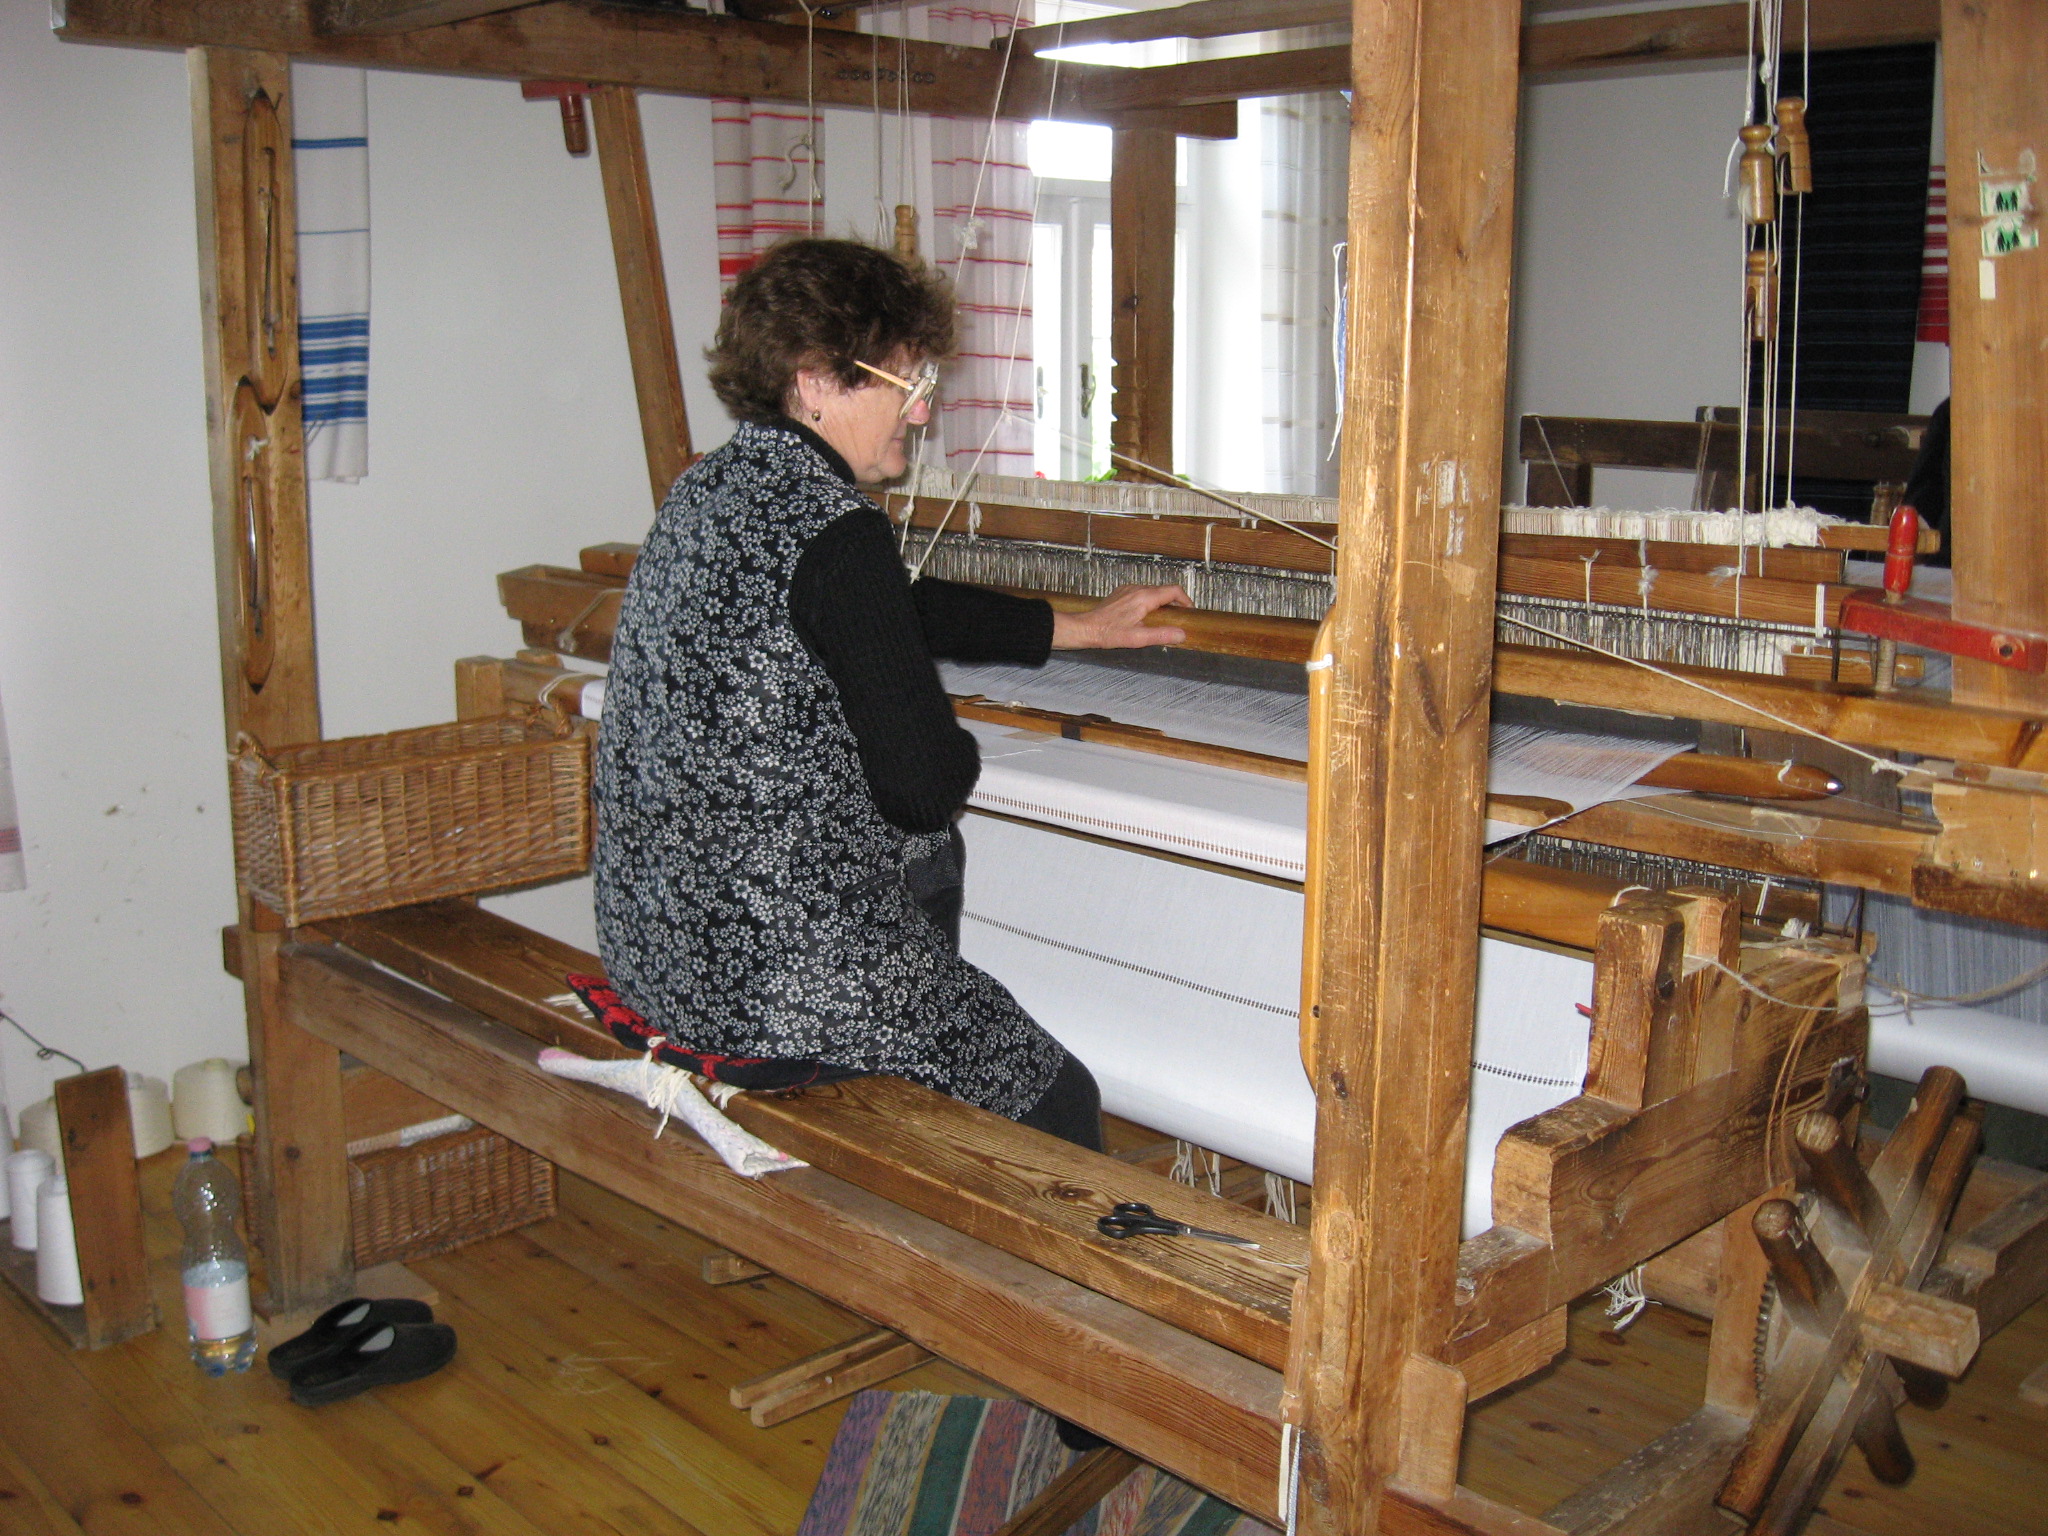 File:Hand+weaving+loom.JPG+-+Wikimedia+C